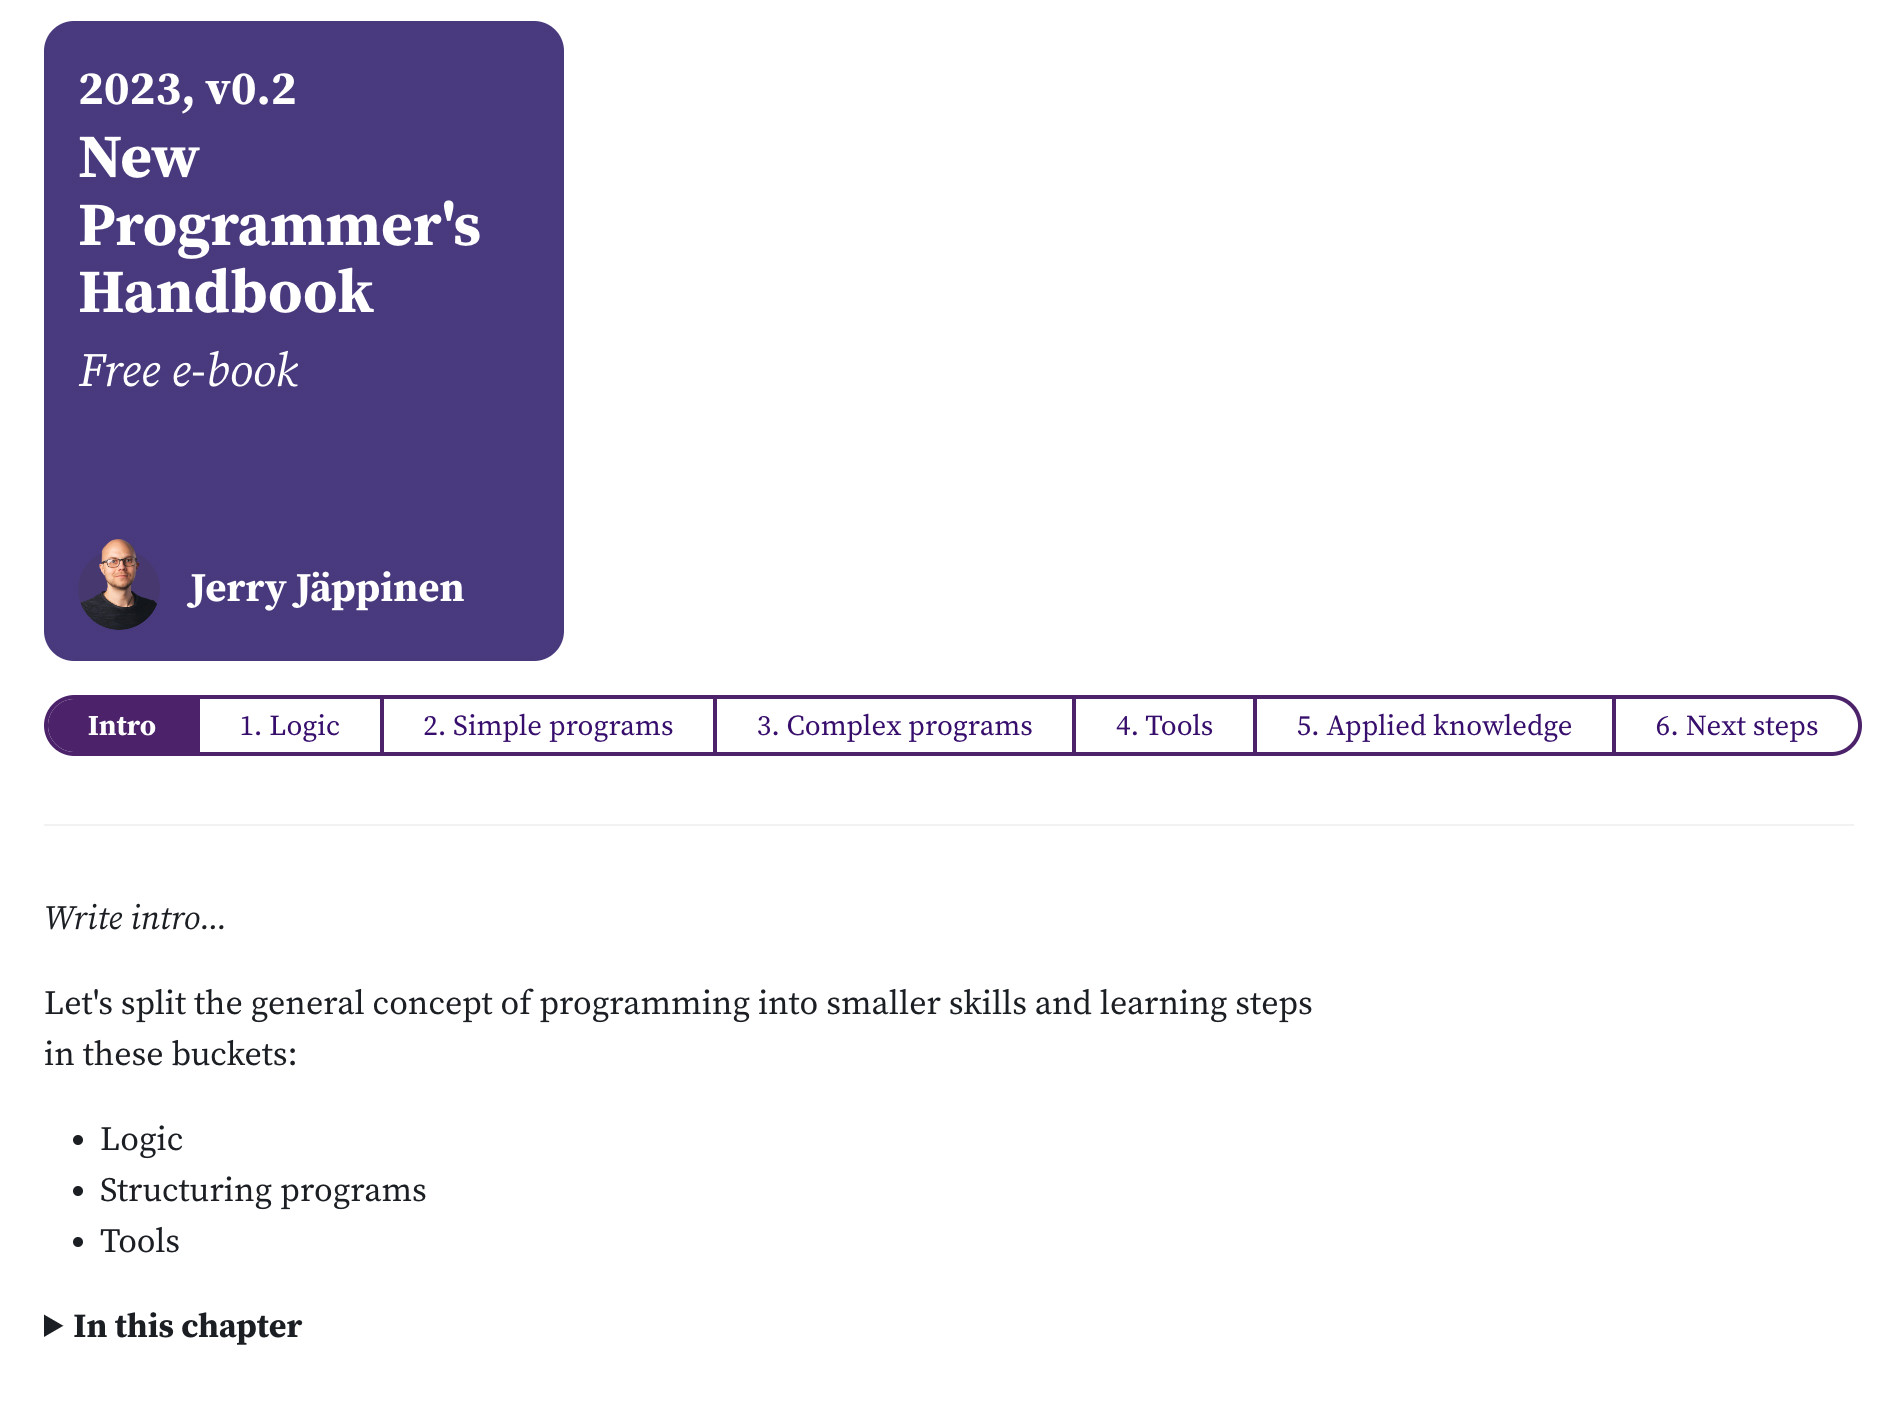 New Programmer's Handbook